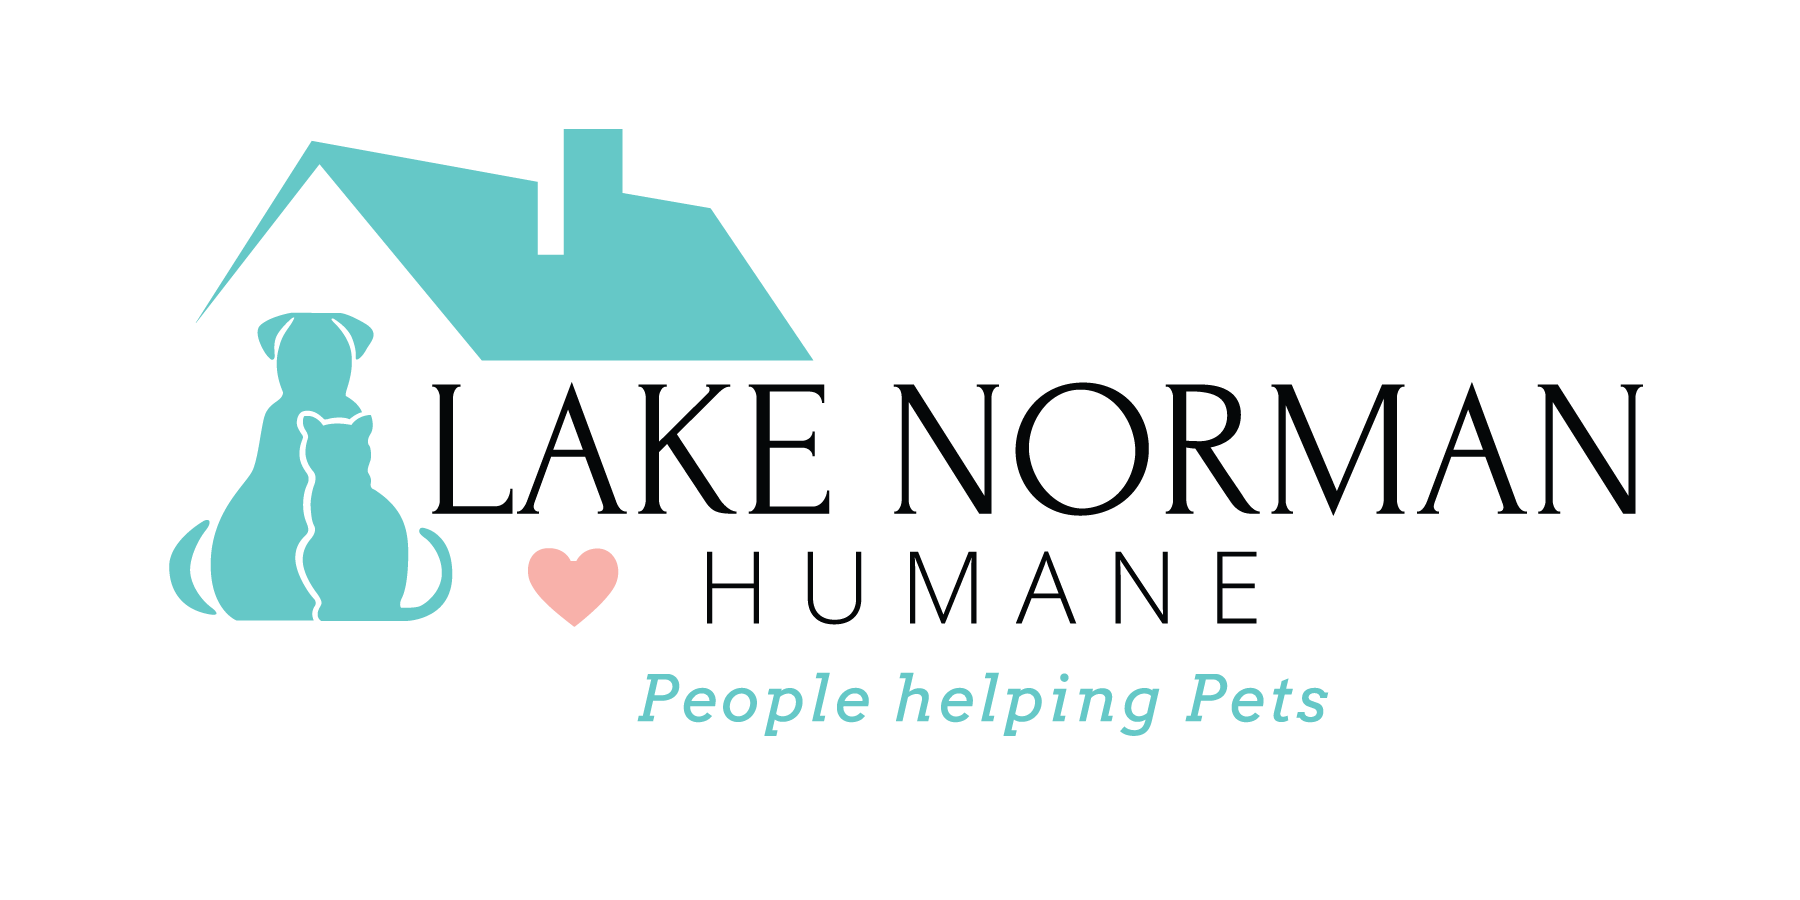 Lake Norman Humane